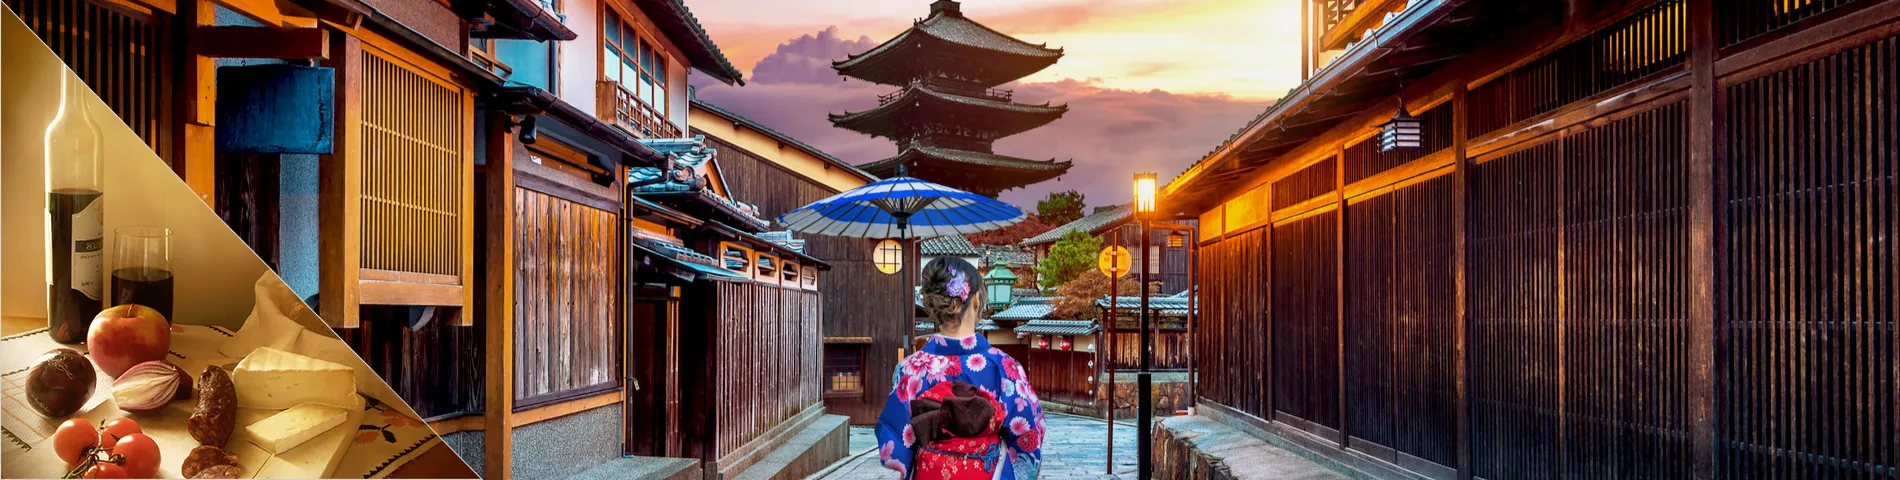 Japan - Japanese & Culture